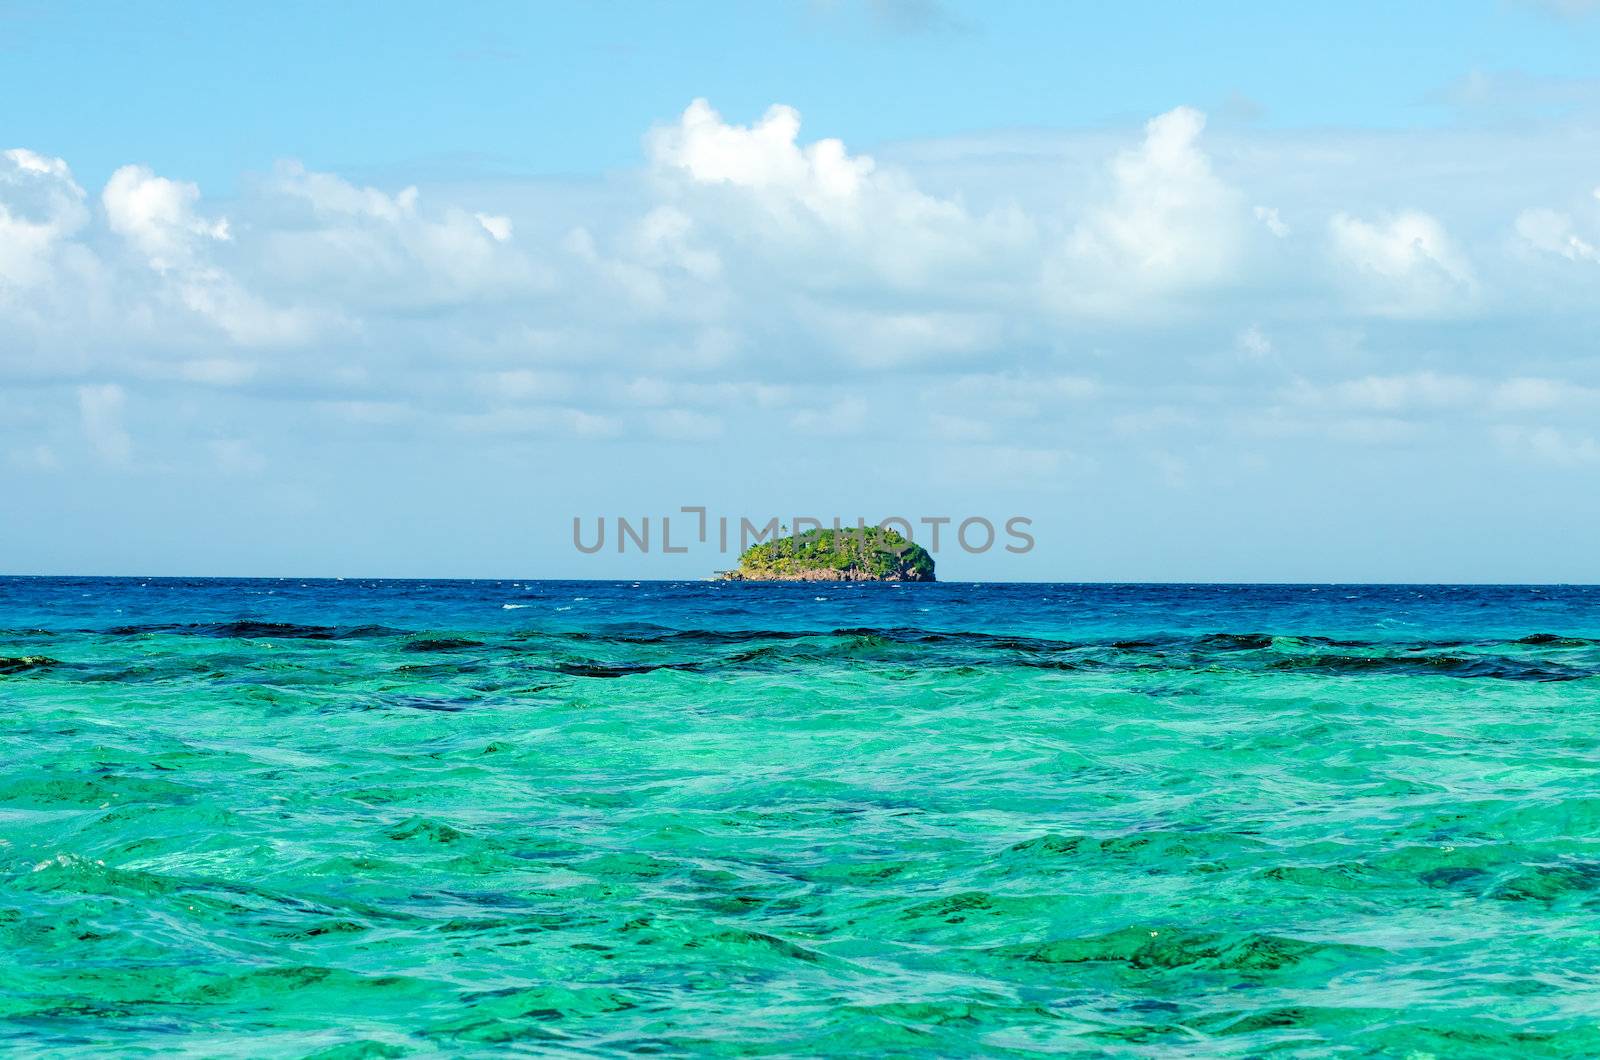 Island on the Horizon by jkraft5